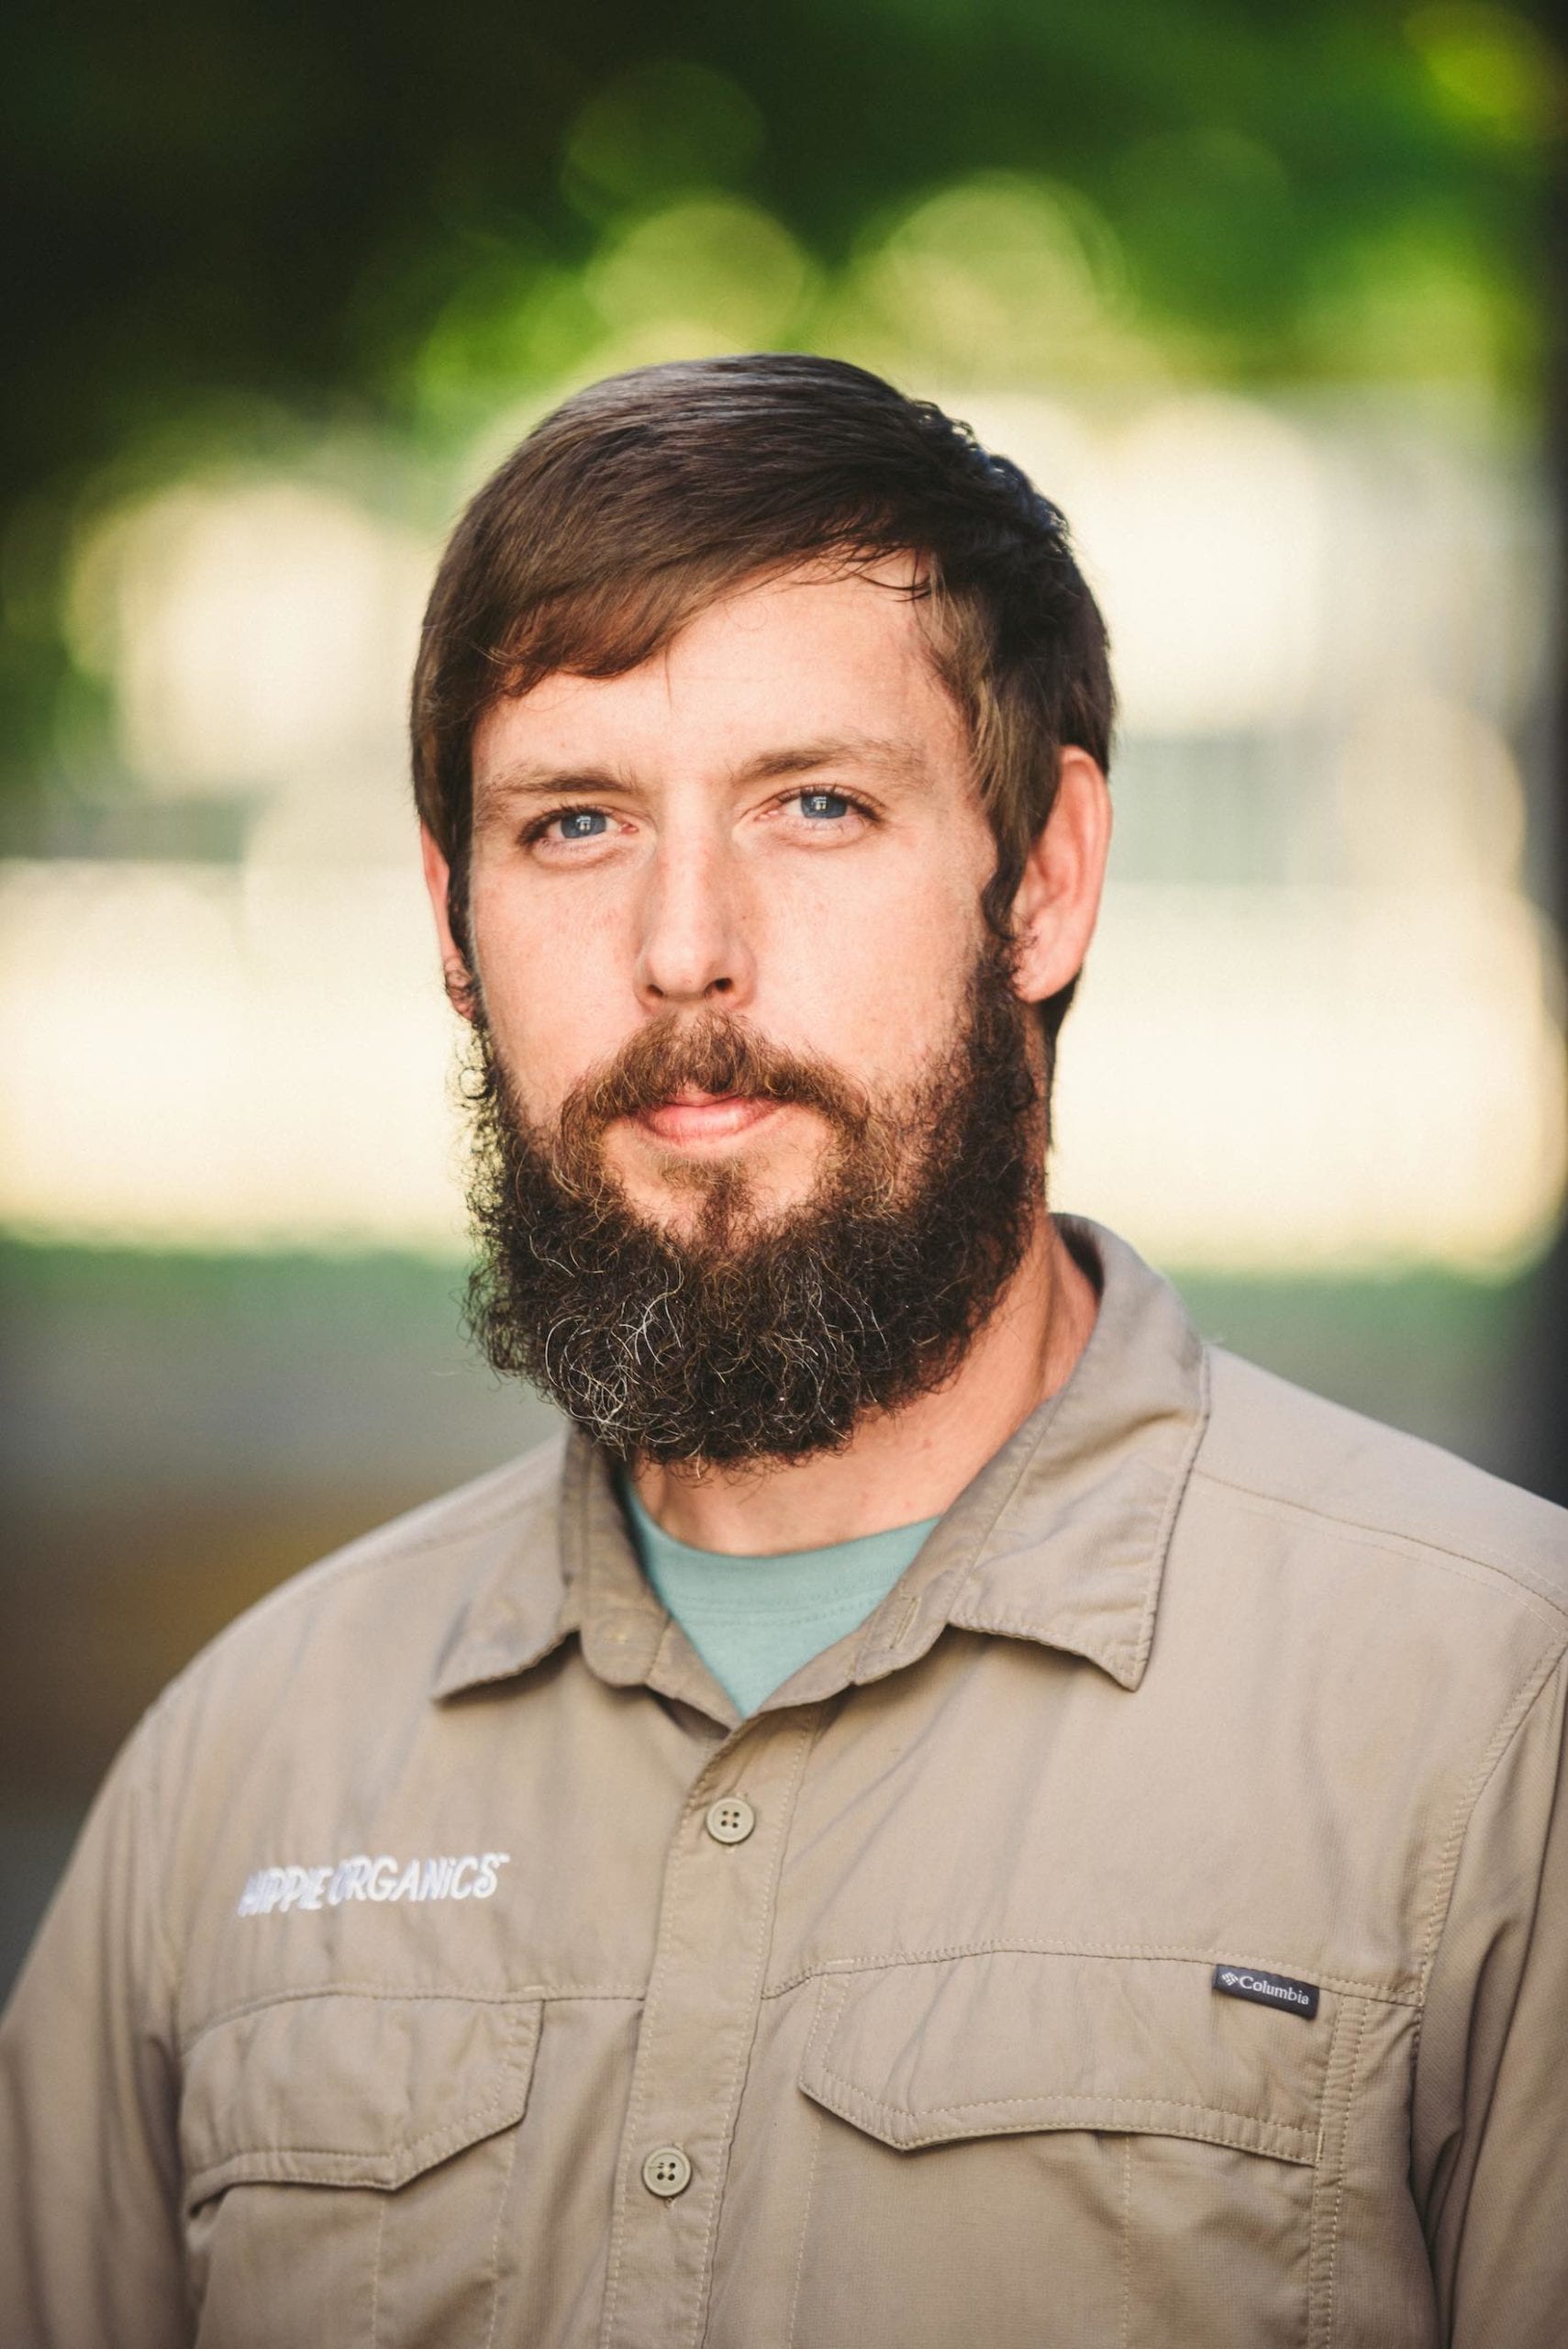 Headshot of male Hippee Organics employee with brown short hair and beard wearing beige uniform